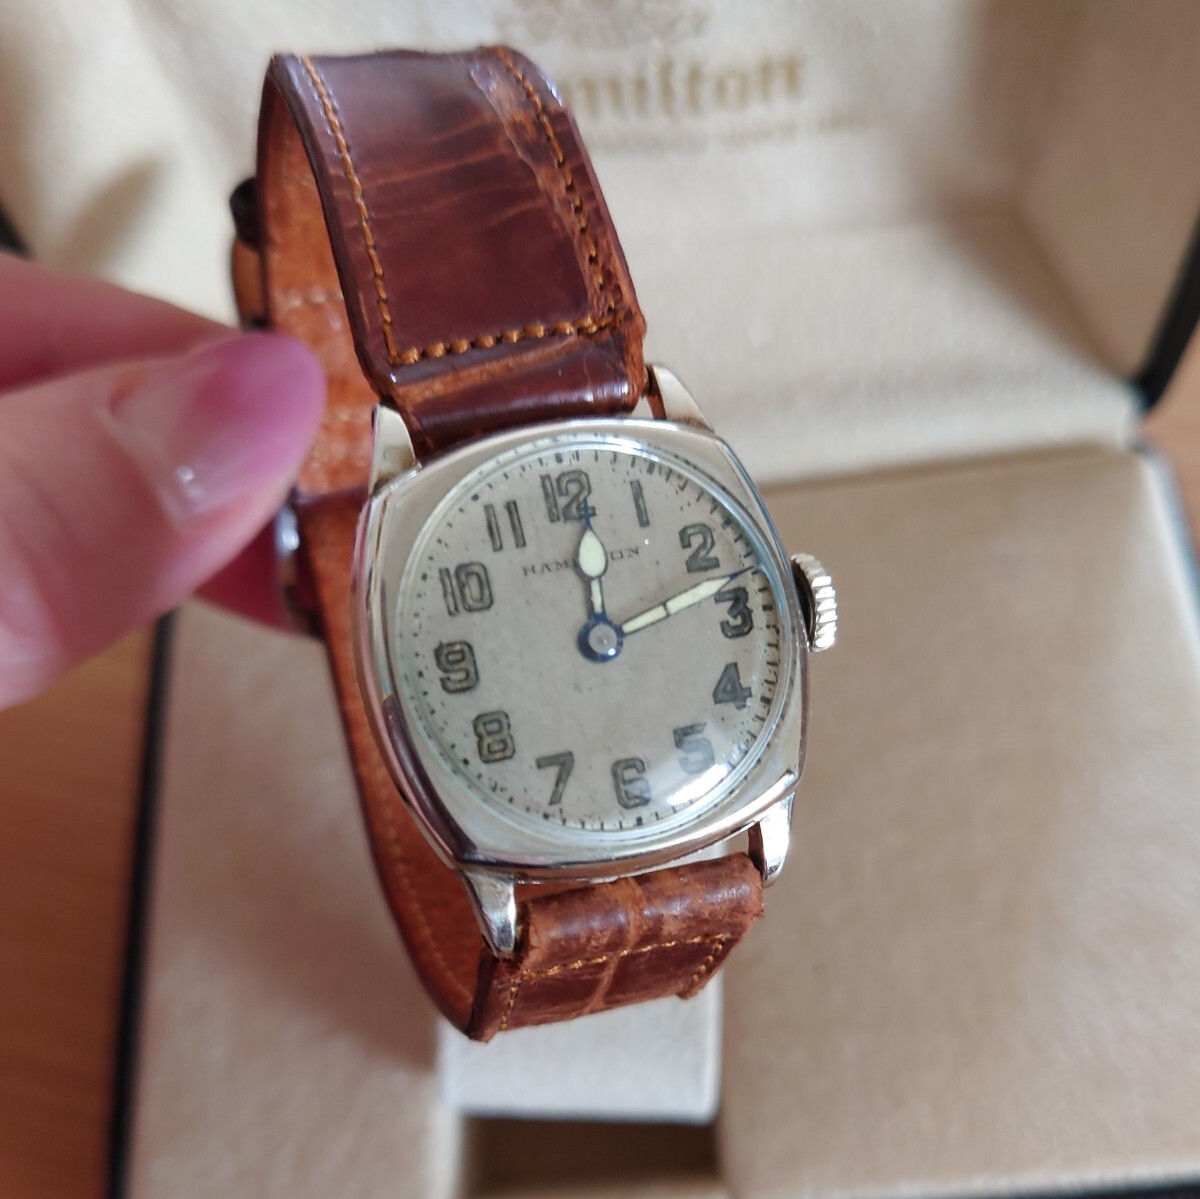  Hamilton Hamilton wristwatch cushion Bo pen Hymer Vintage antique Christopher no- Ran a-ru* deco style boxed 